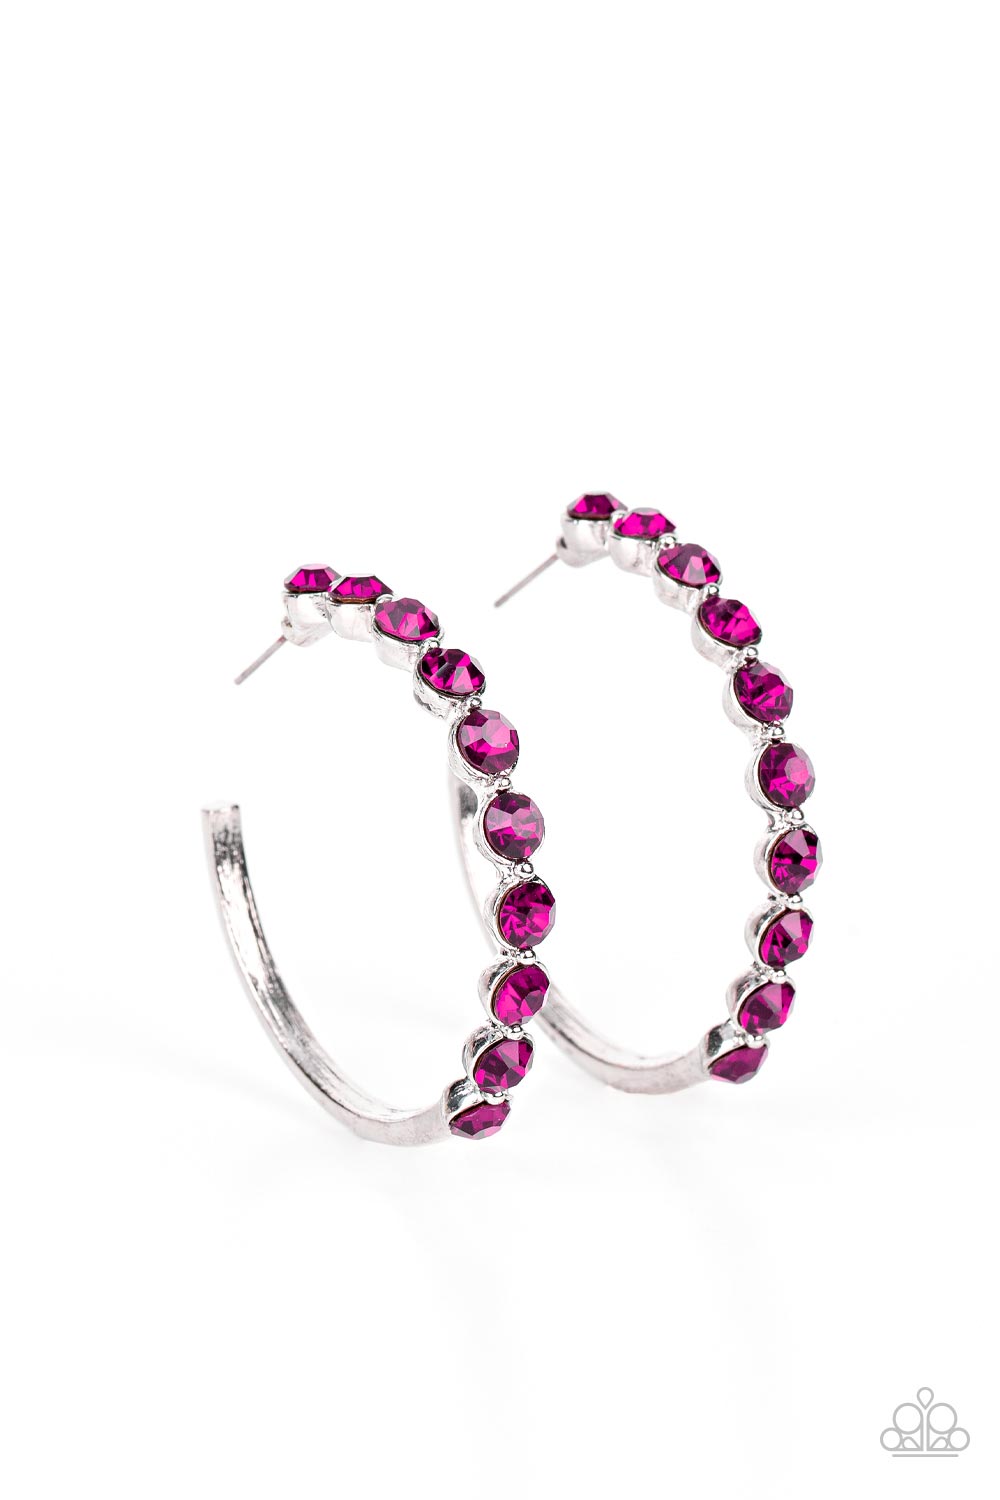 Paparazzi Photo Finish - Pink Earrings - A Finishing Touch Jewelry